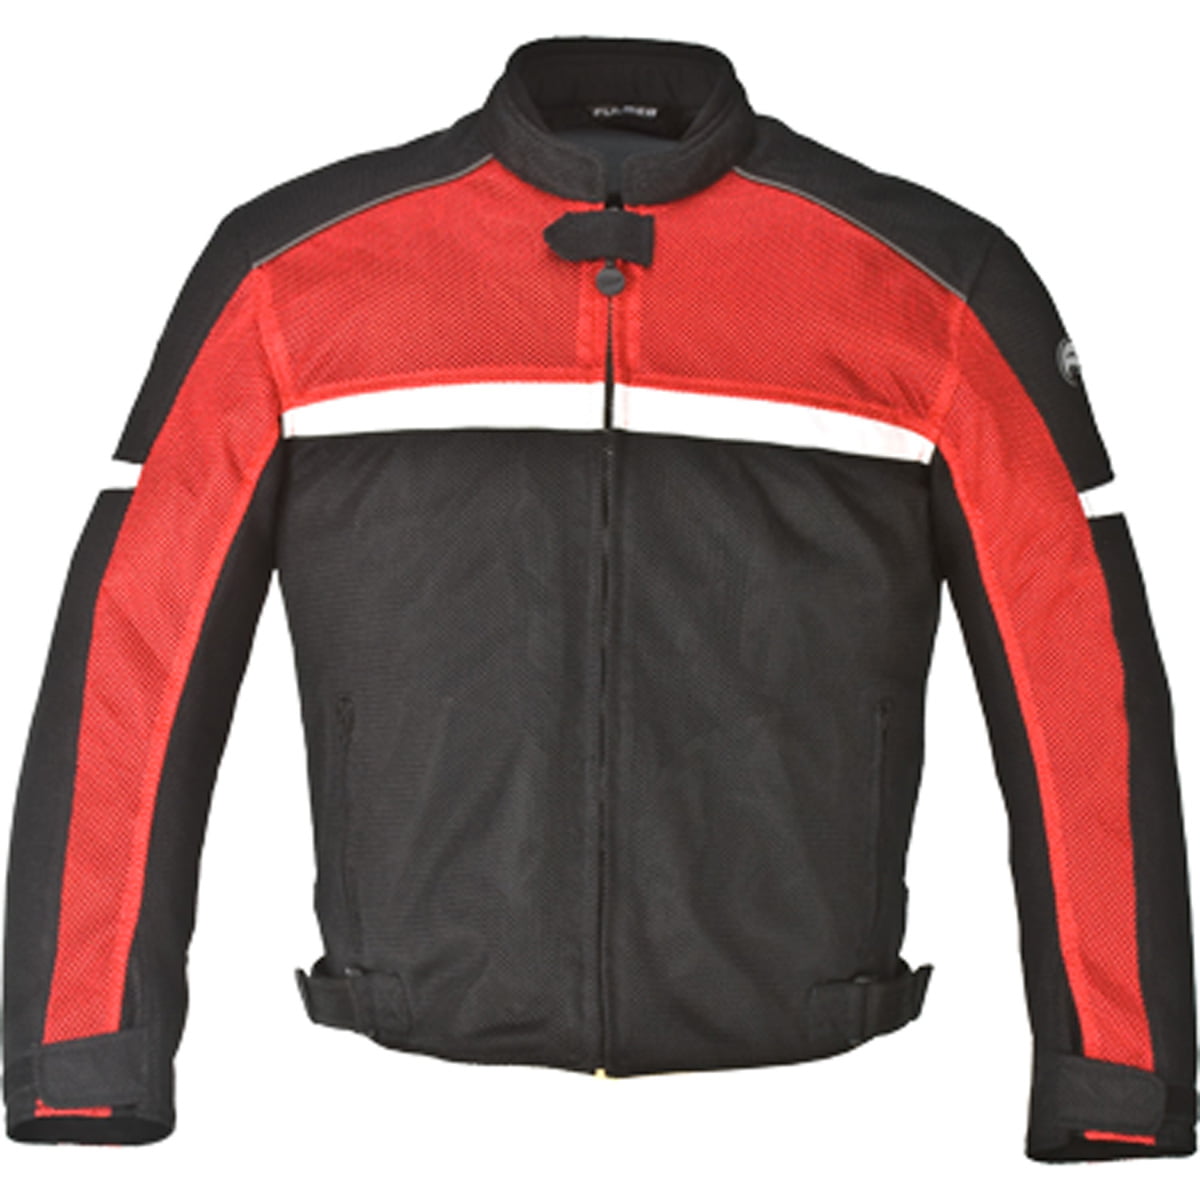 Men's Fulmer Firetrak II Jacket Motorcycle Riding Coat Textile/Mesh w ...